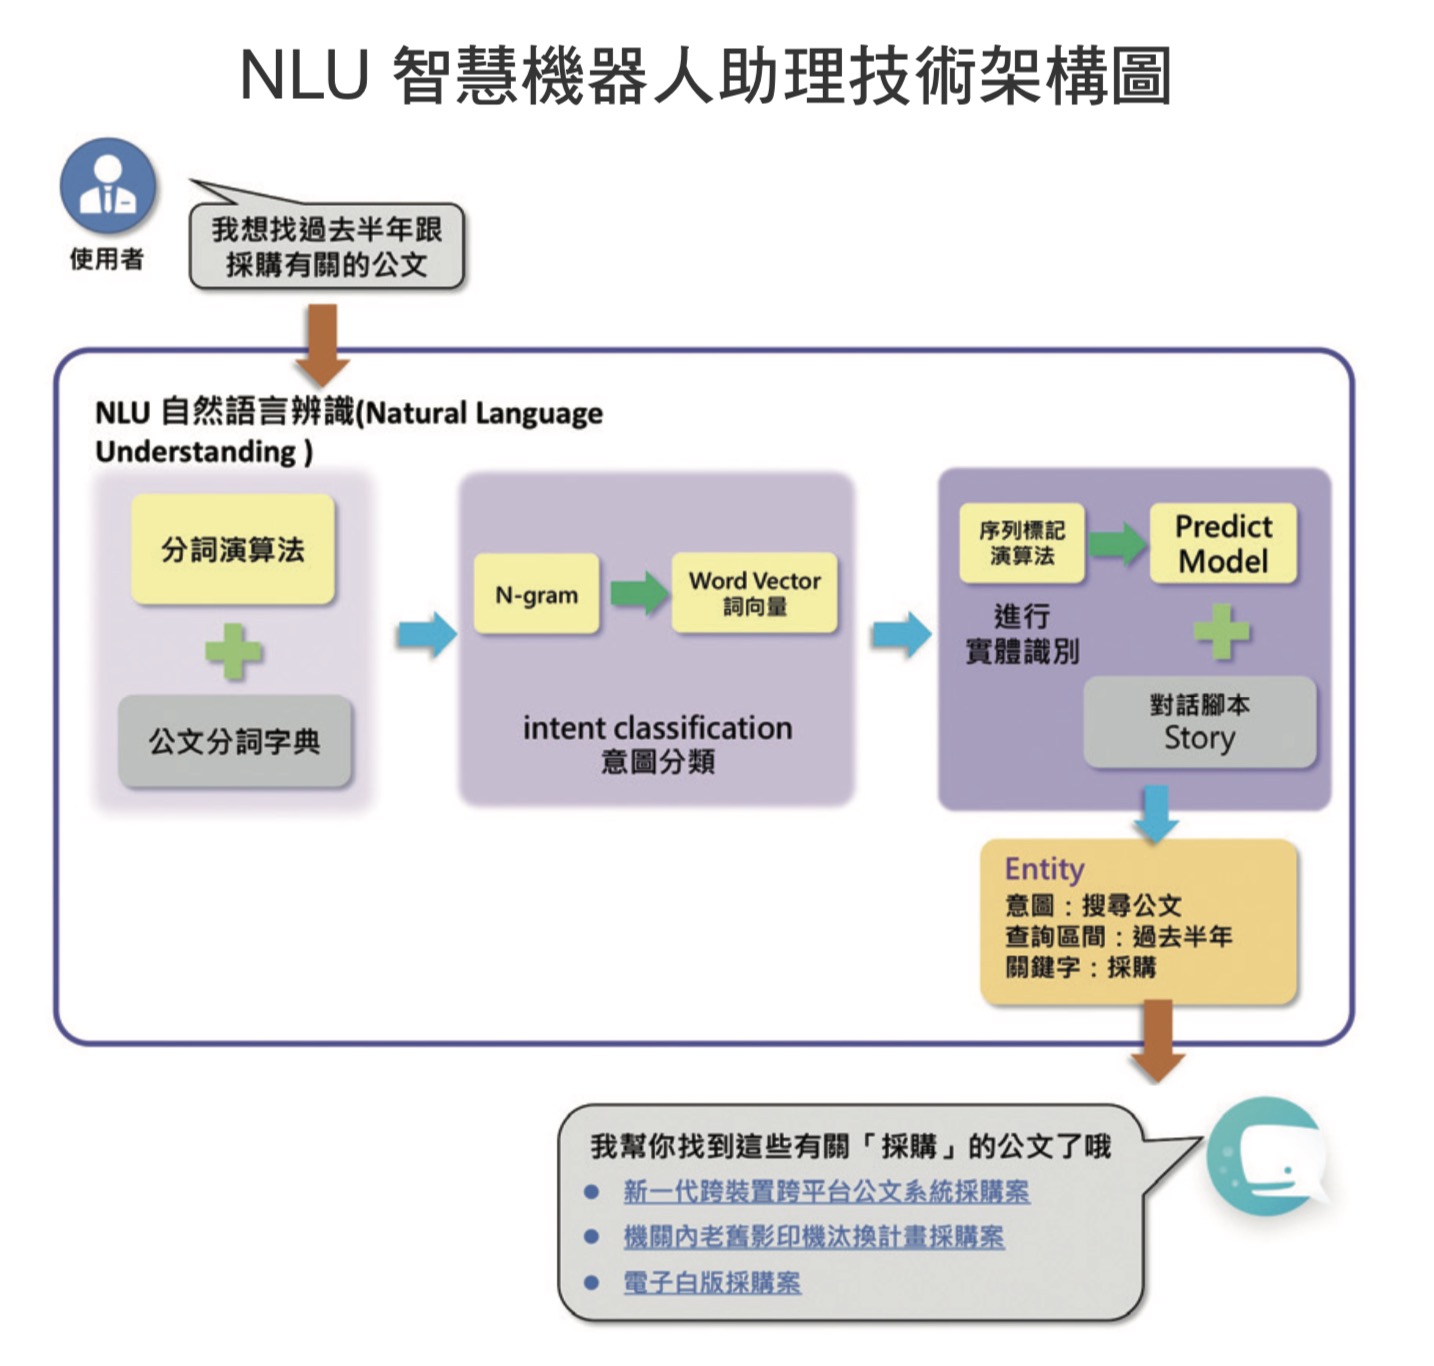 NLU 智慧機器人助理技術架構圖